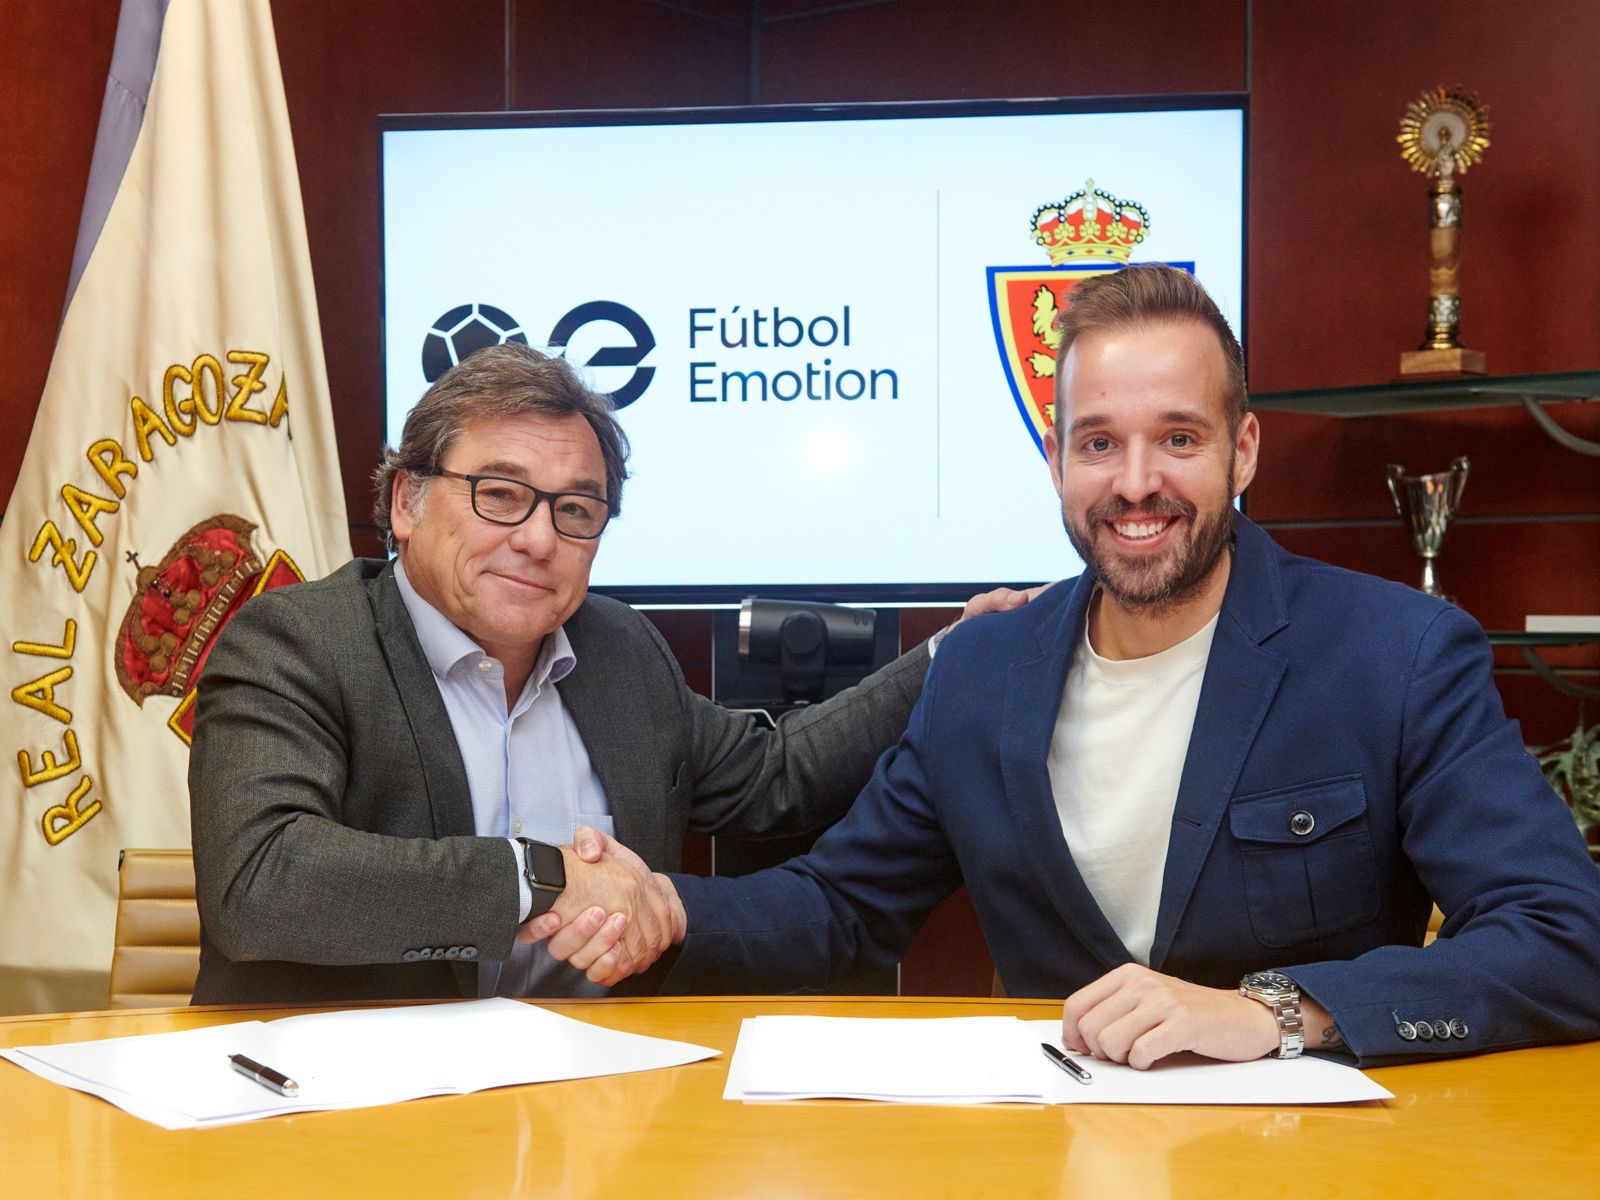 El Real Zaragoza firma a MGS Seguros para la manga de la camiseta